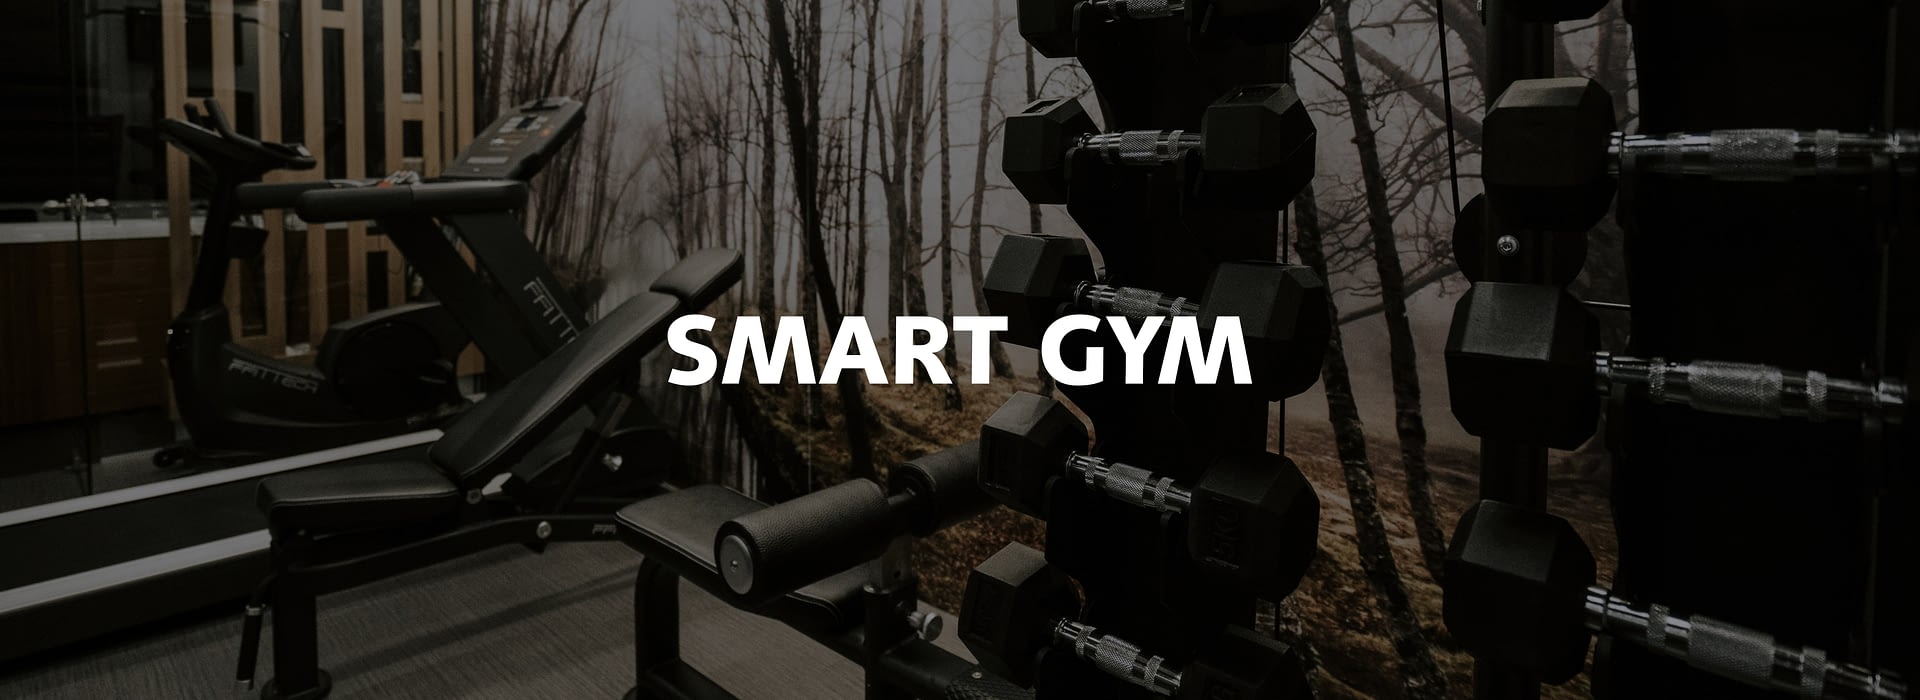 Smart Gym-min